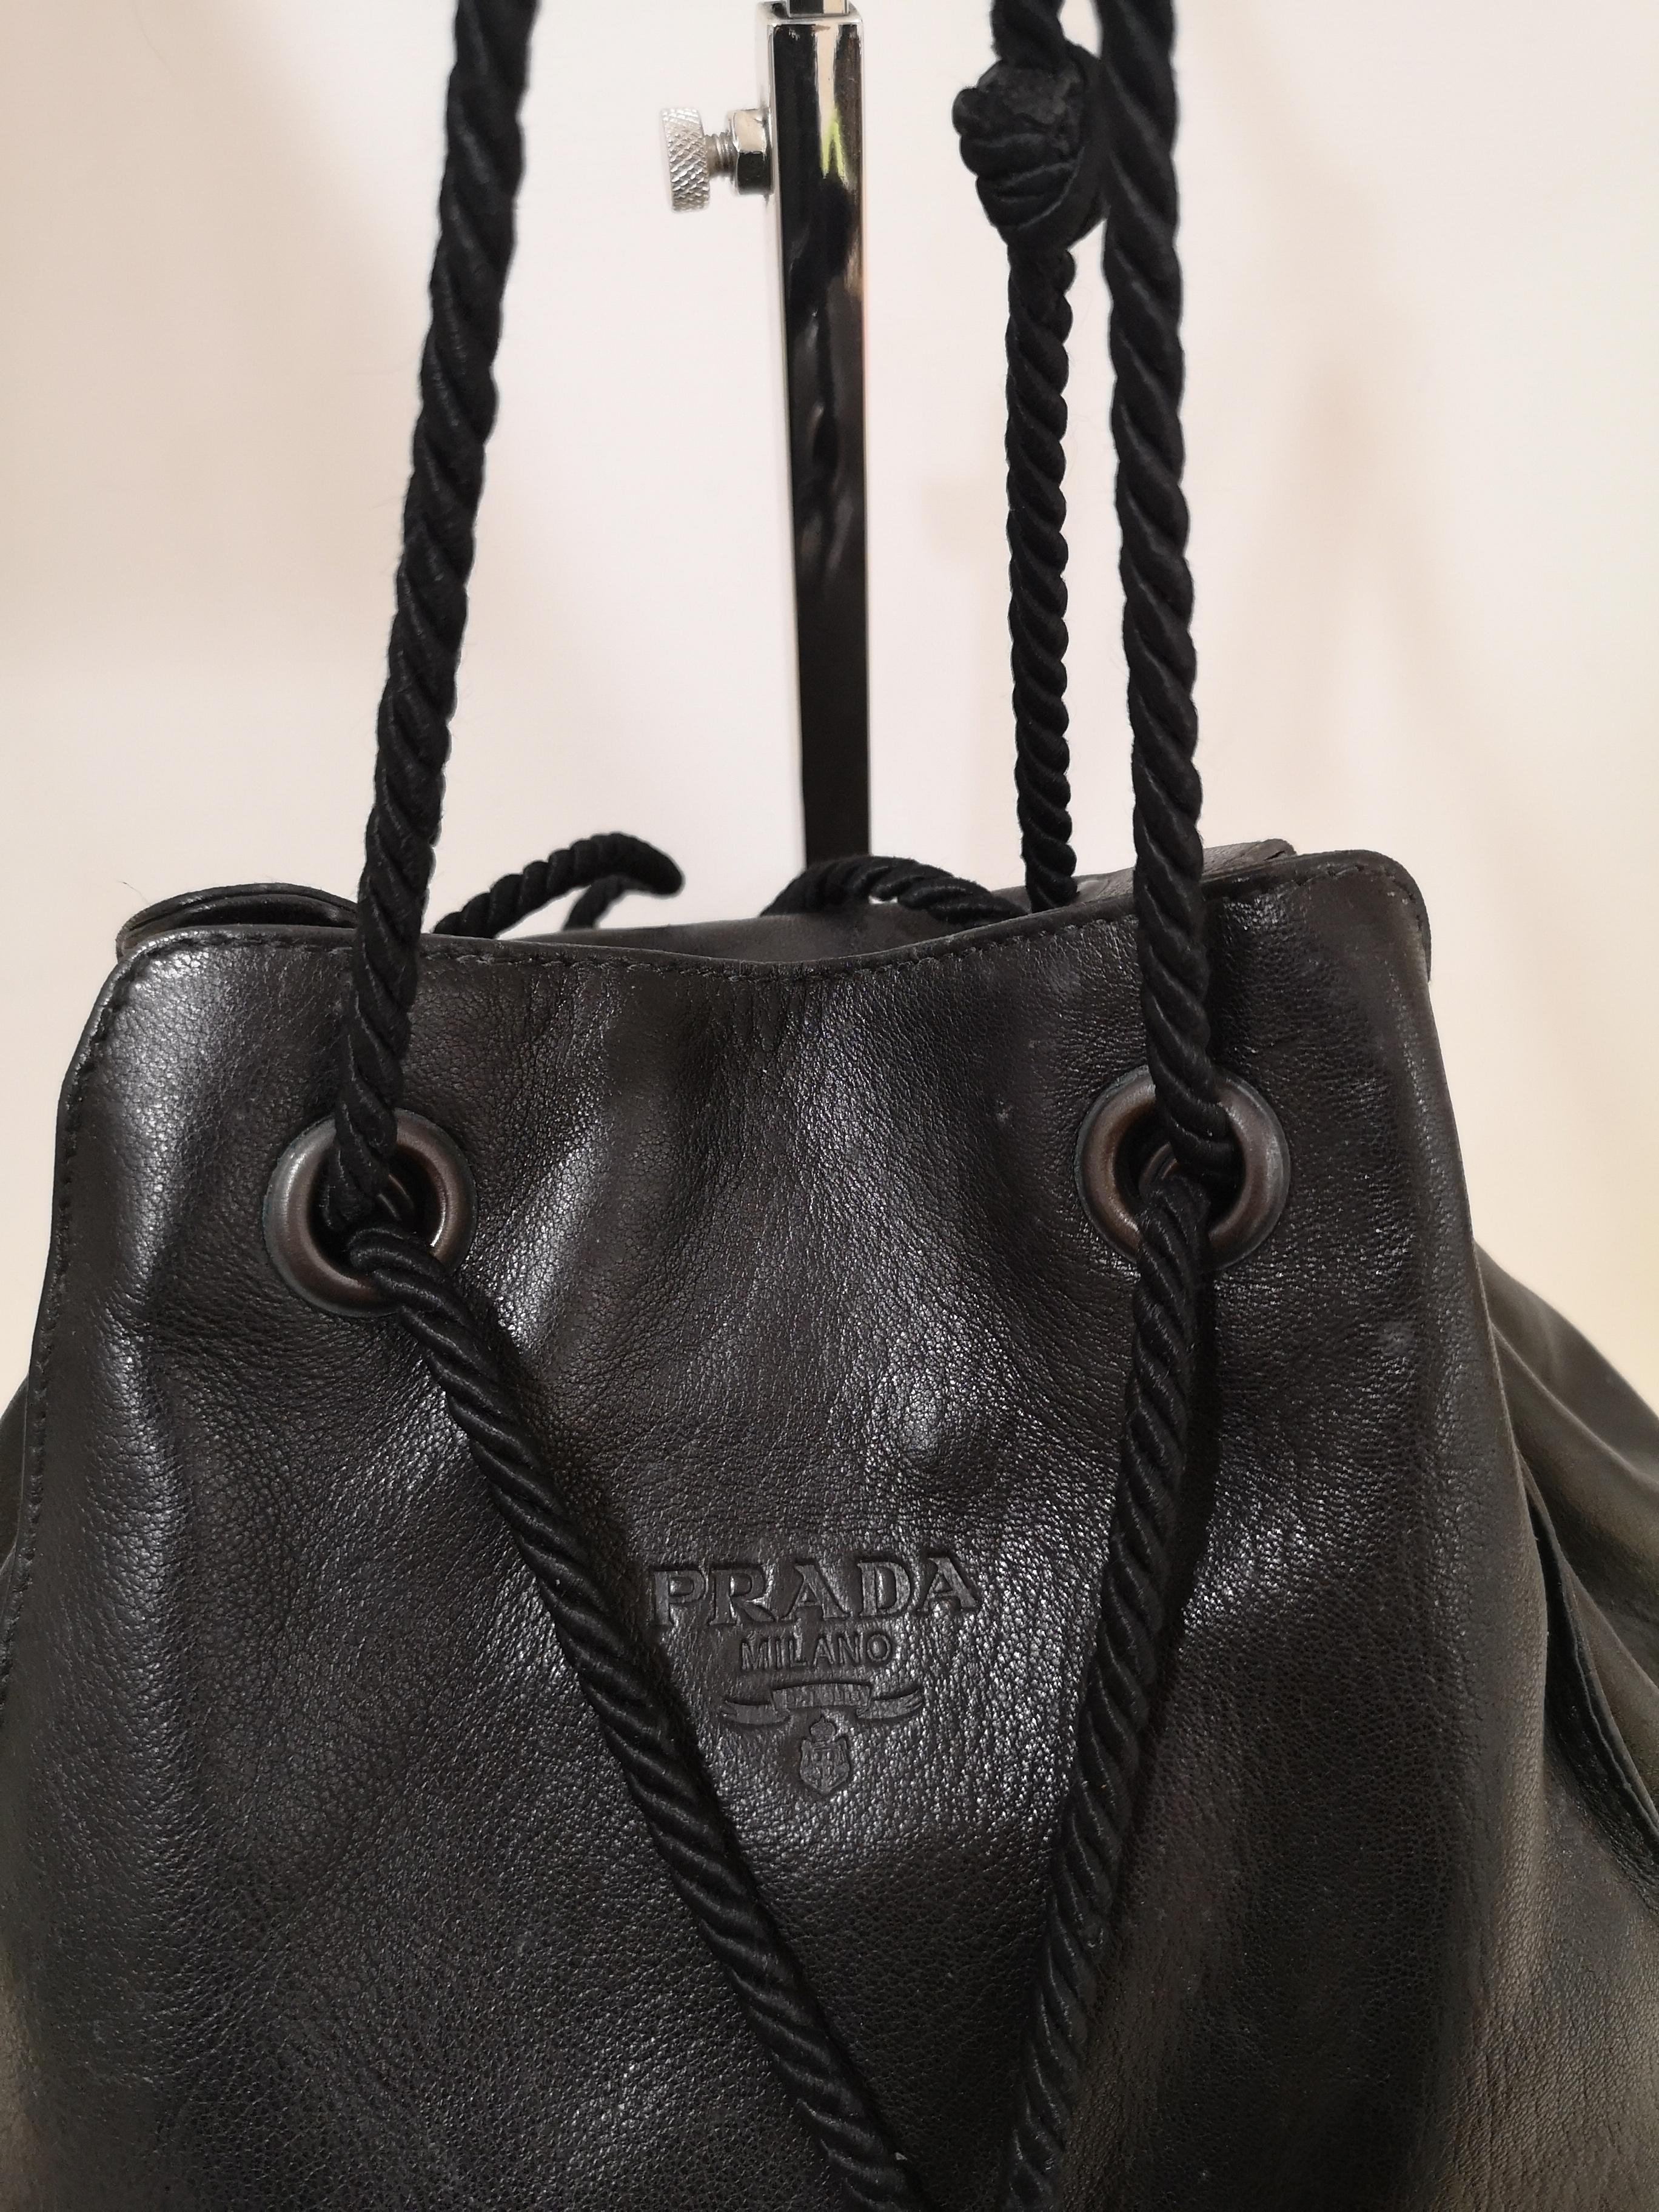 Prada black leather satchel
Prada Milano black soft leather totally made in italy
measurements: 28 * 28 cm * 24 cm depth